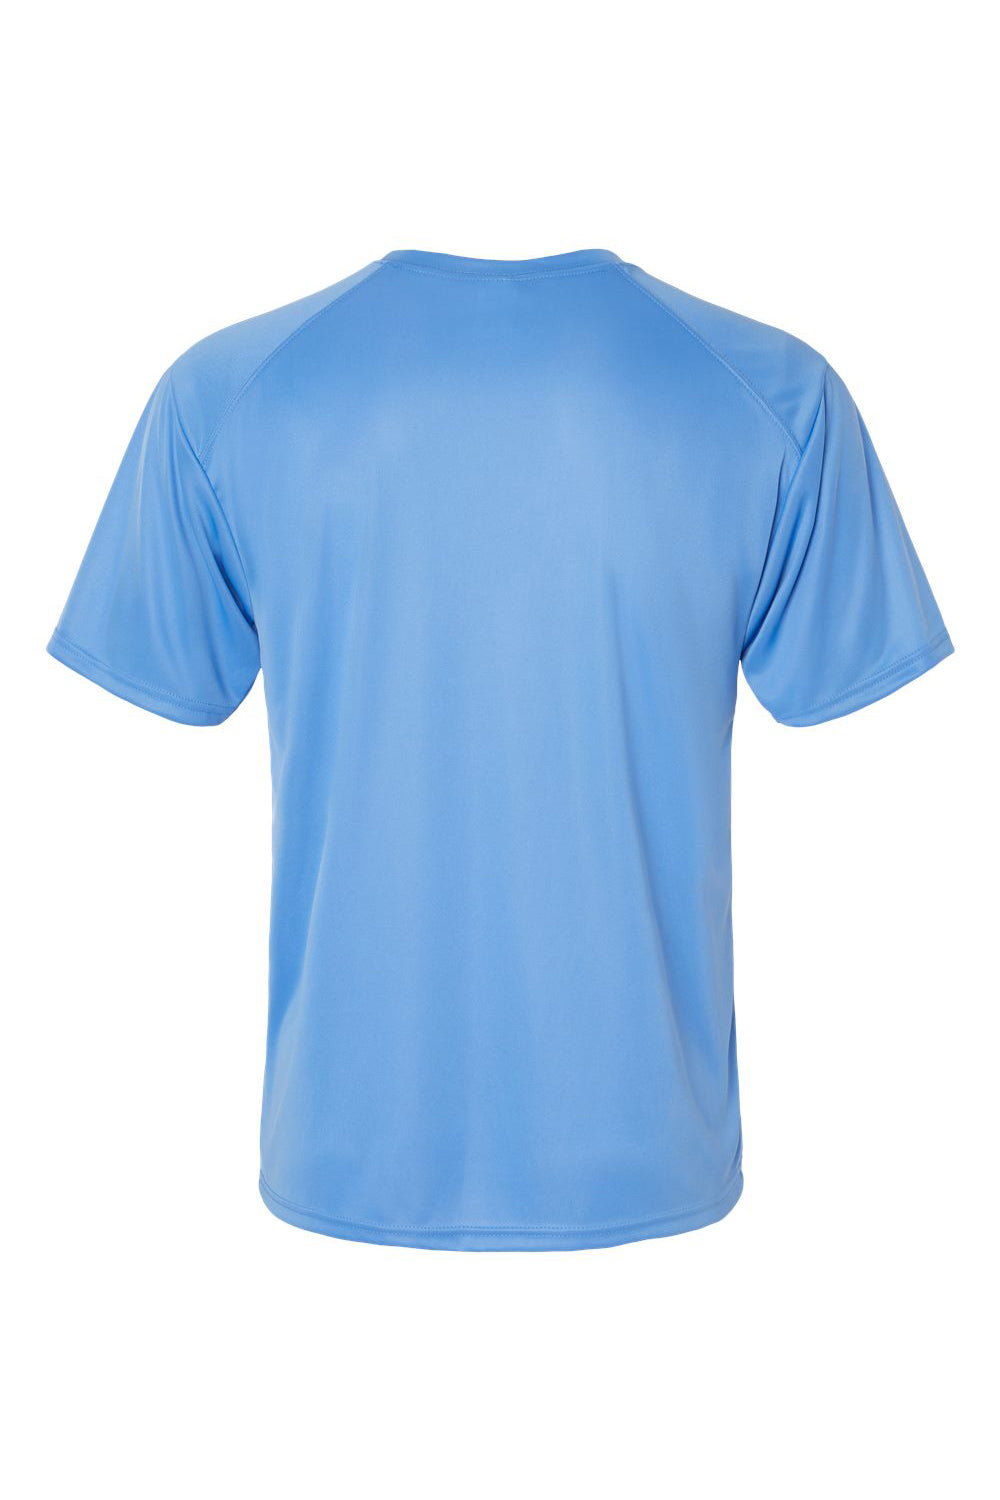 Paragon 200 Mens Islander Performance Short Sleeve Crewneck T-Shirt Bimini Blue Flat Back